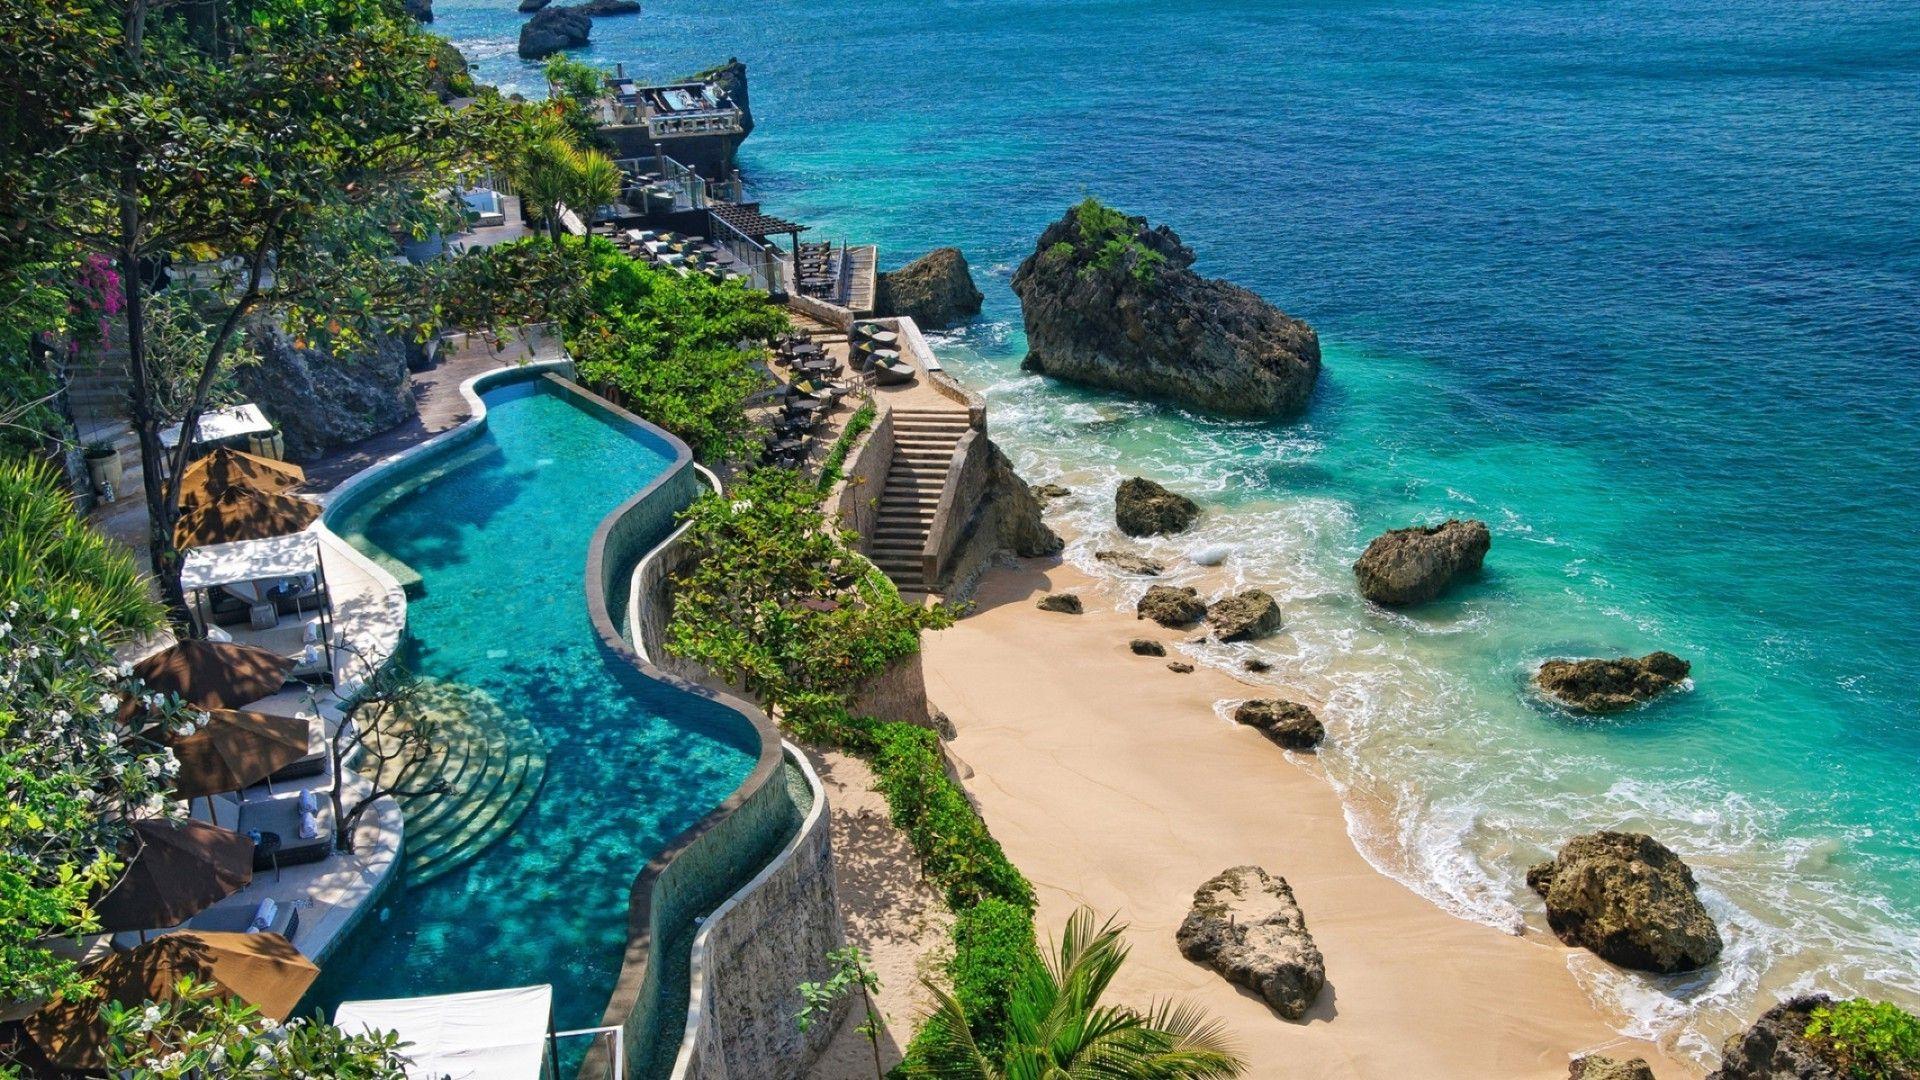 Bali Desktop Wallpapers - Top Free Bali Desktop Backgrounds